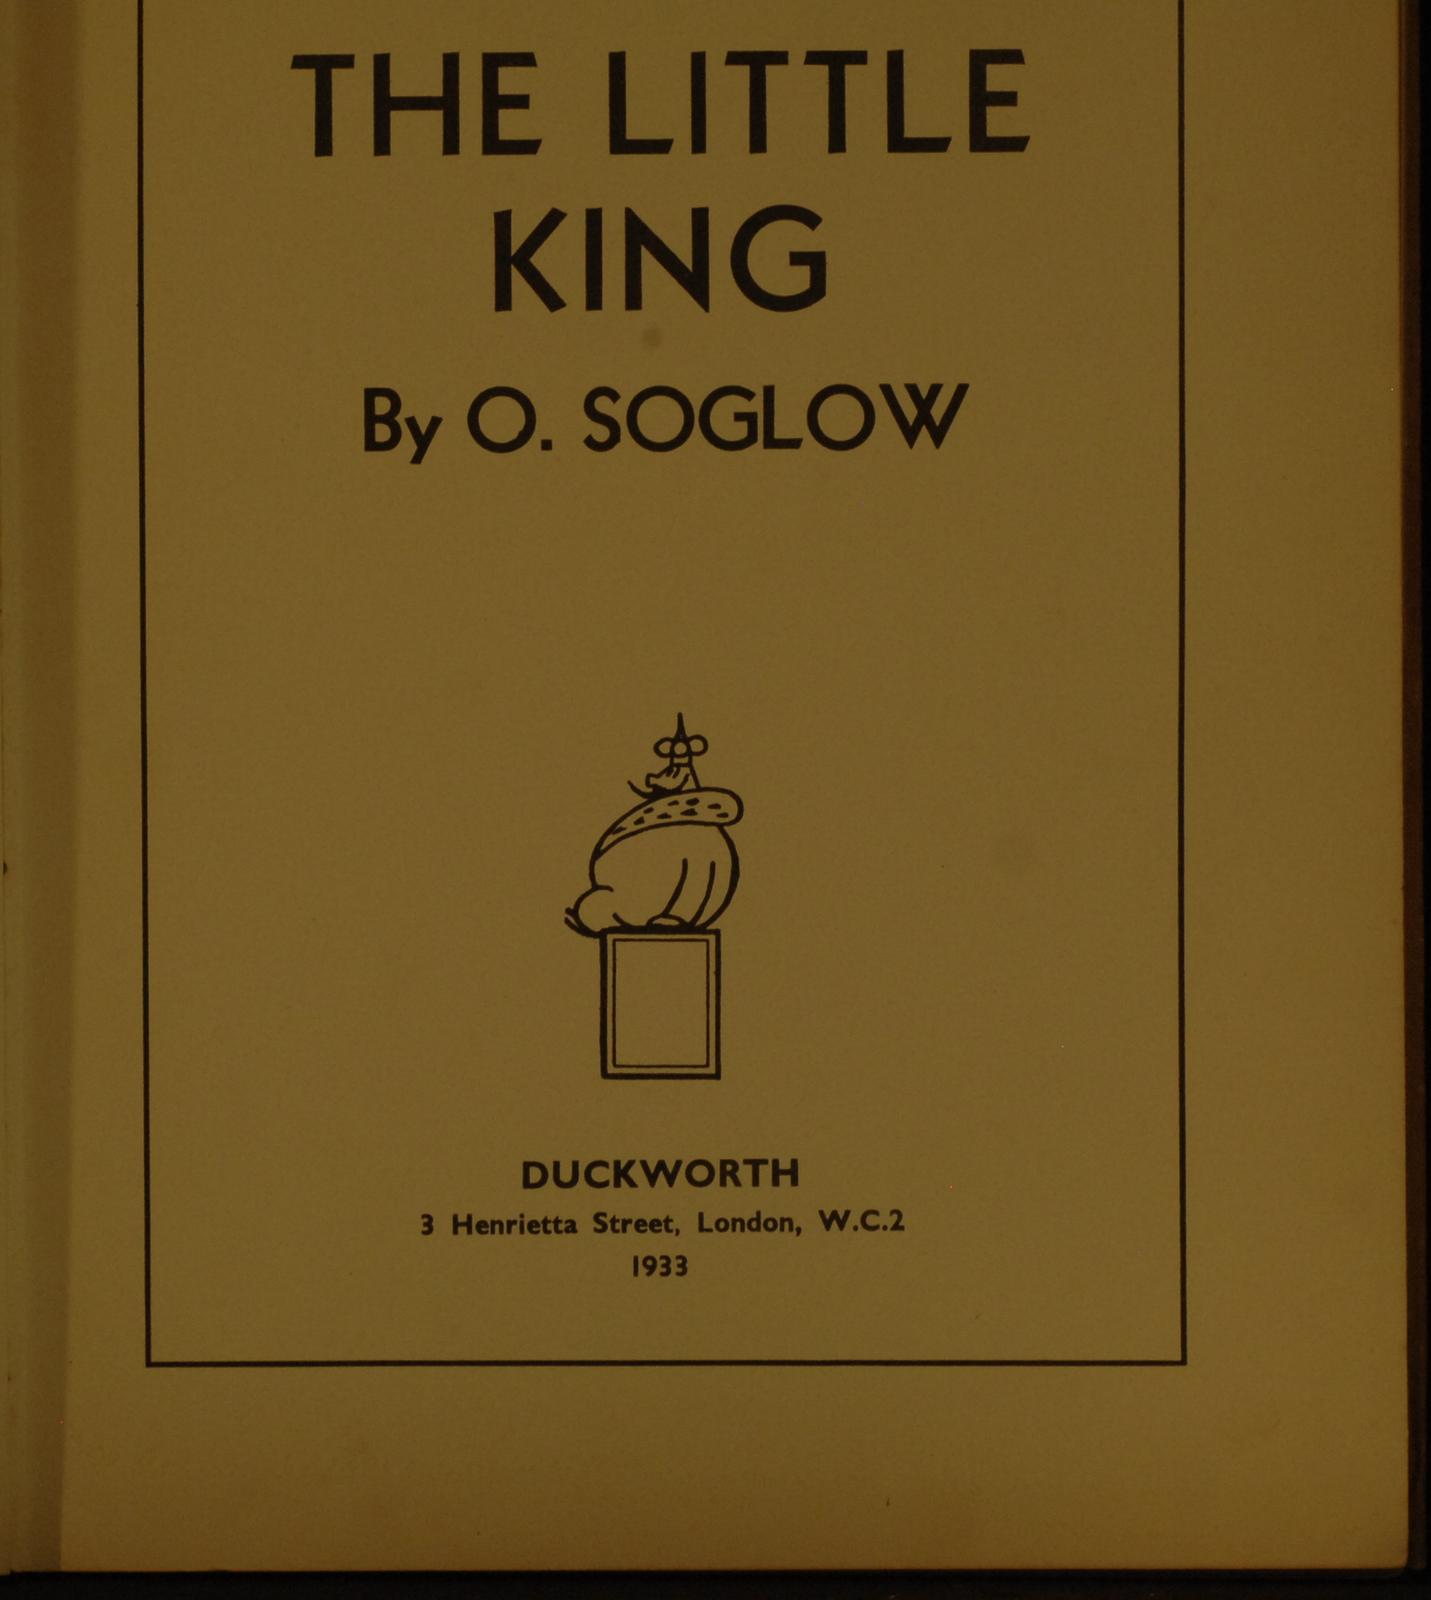 mbb006295d_-_Soglow_O_-_The_Little_King_-_O_SOGLOW.jpg